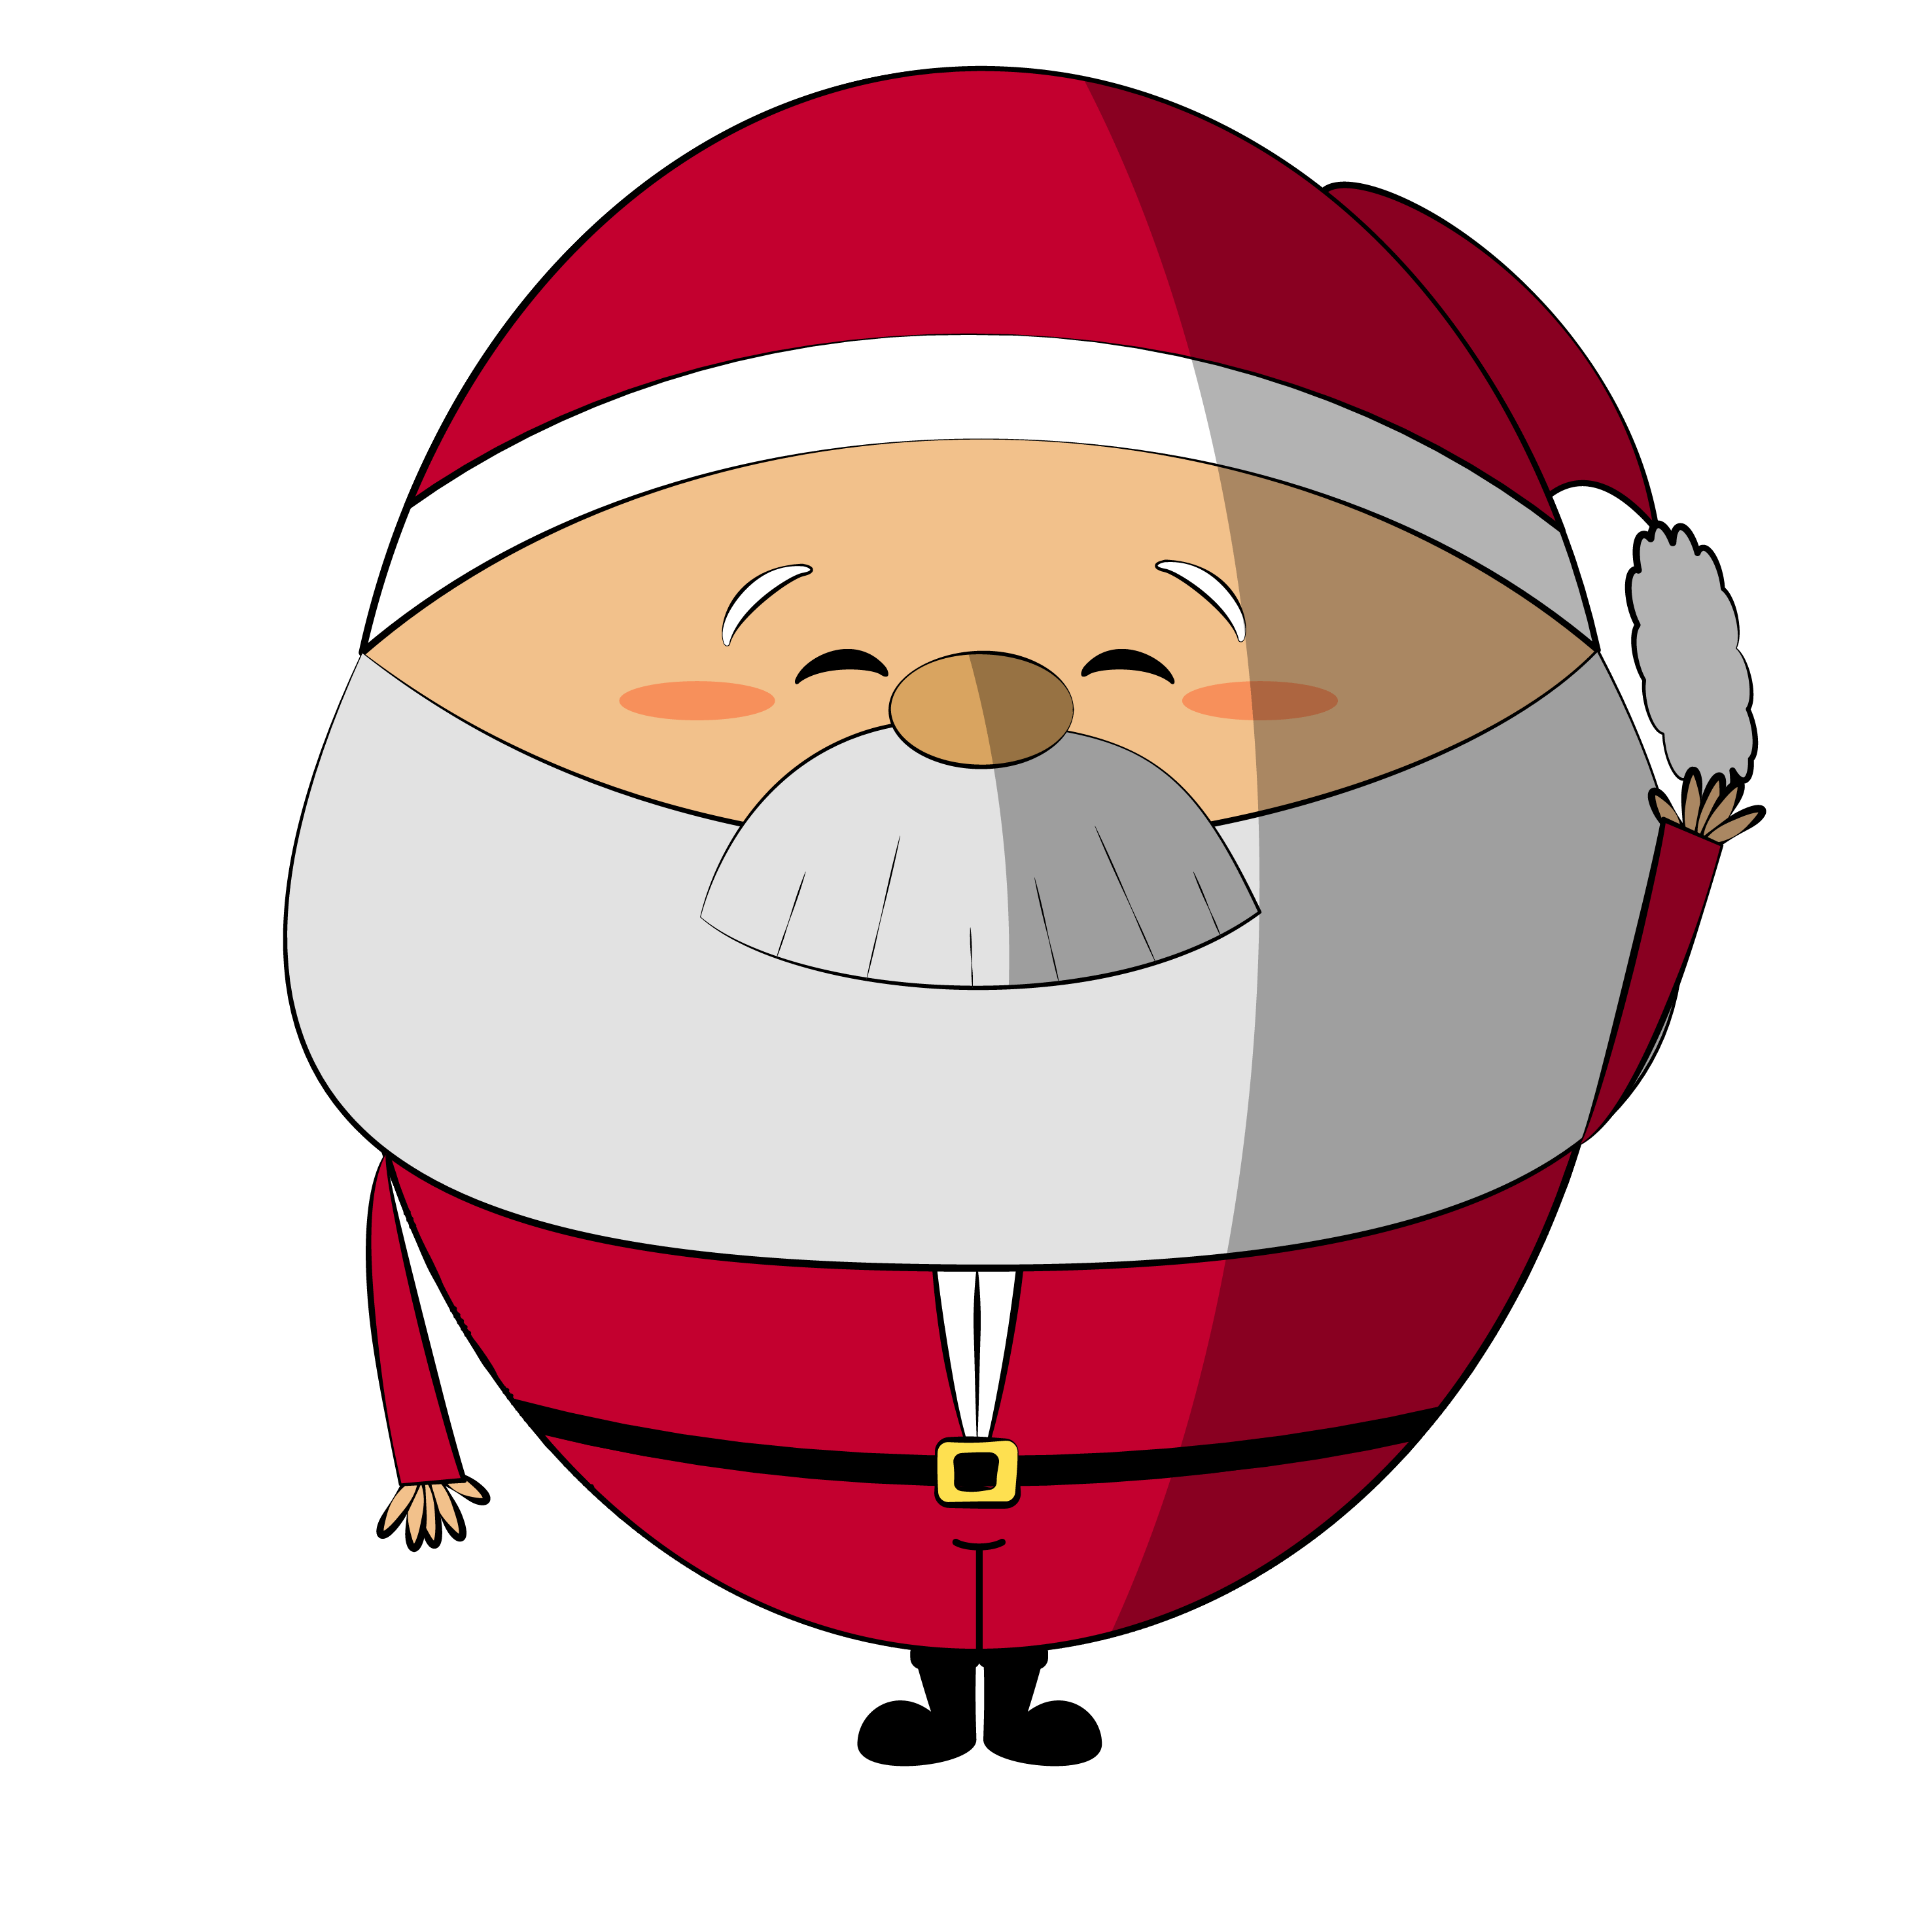 Claus clip art nastaran. Clipart free santa